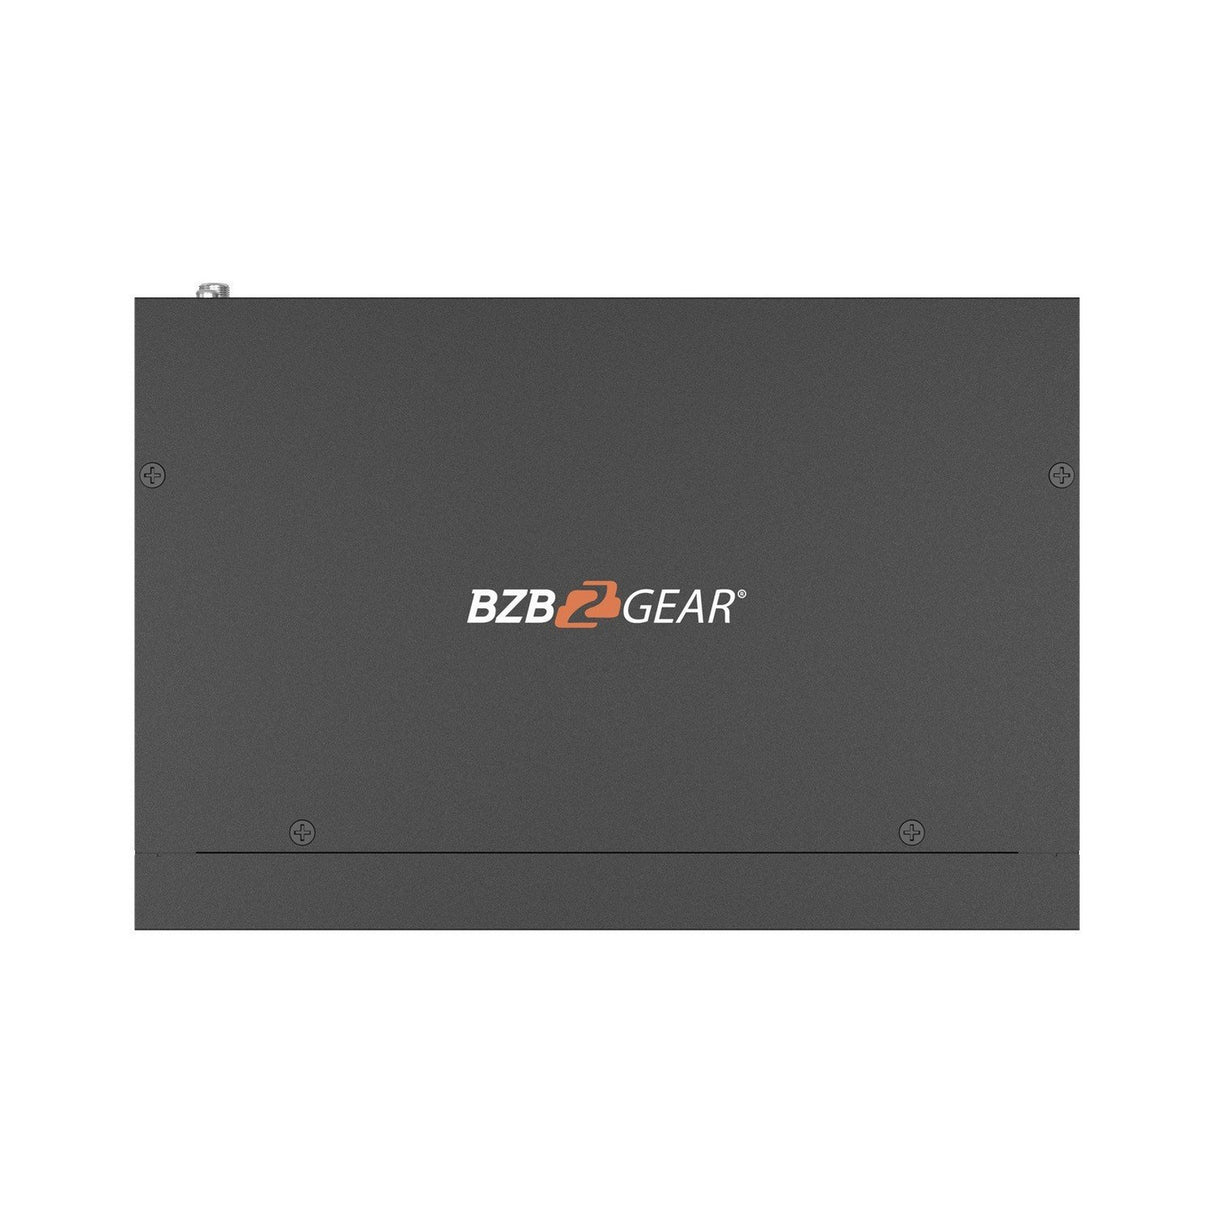 BZBGEAR BG-UHD-VW24 2x2 4K UHD HDMI Video Wall Processor with IP/RS232 Control